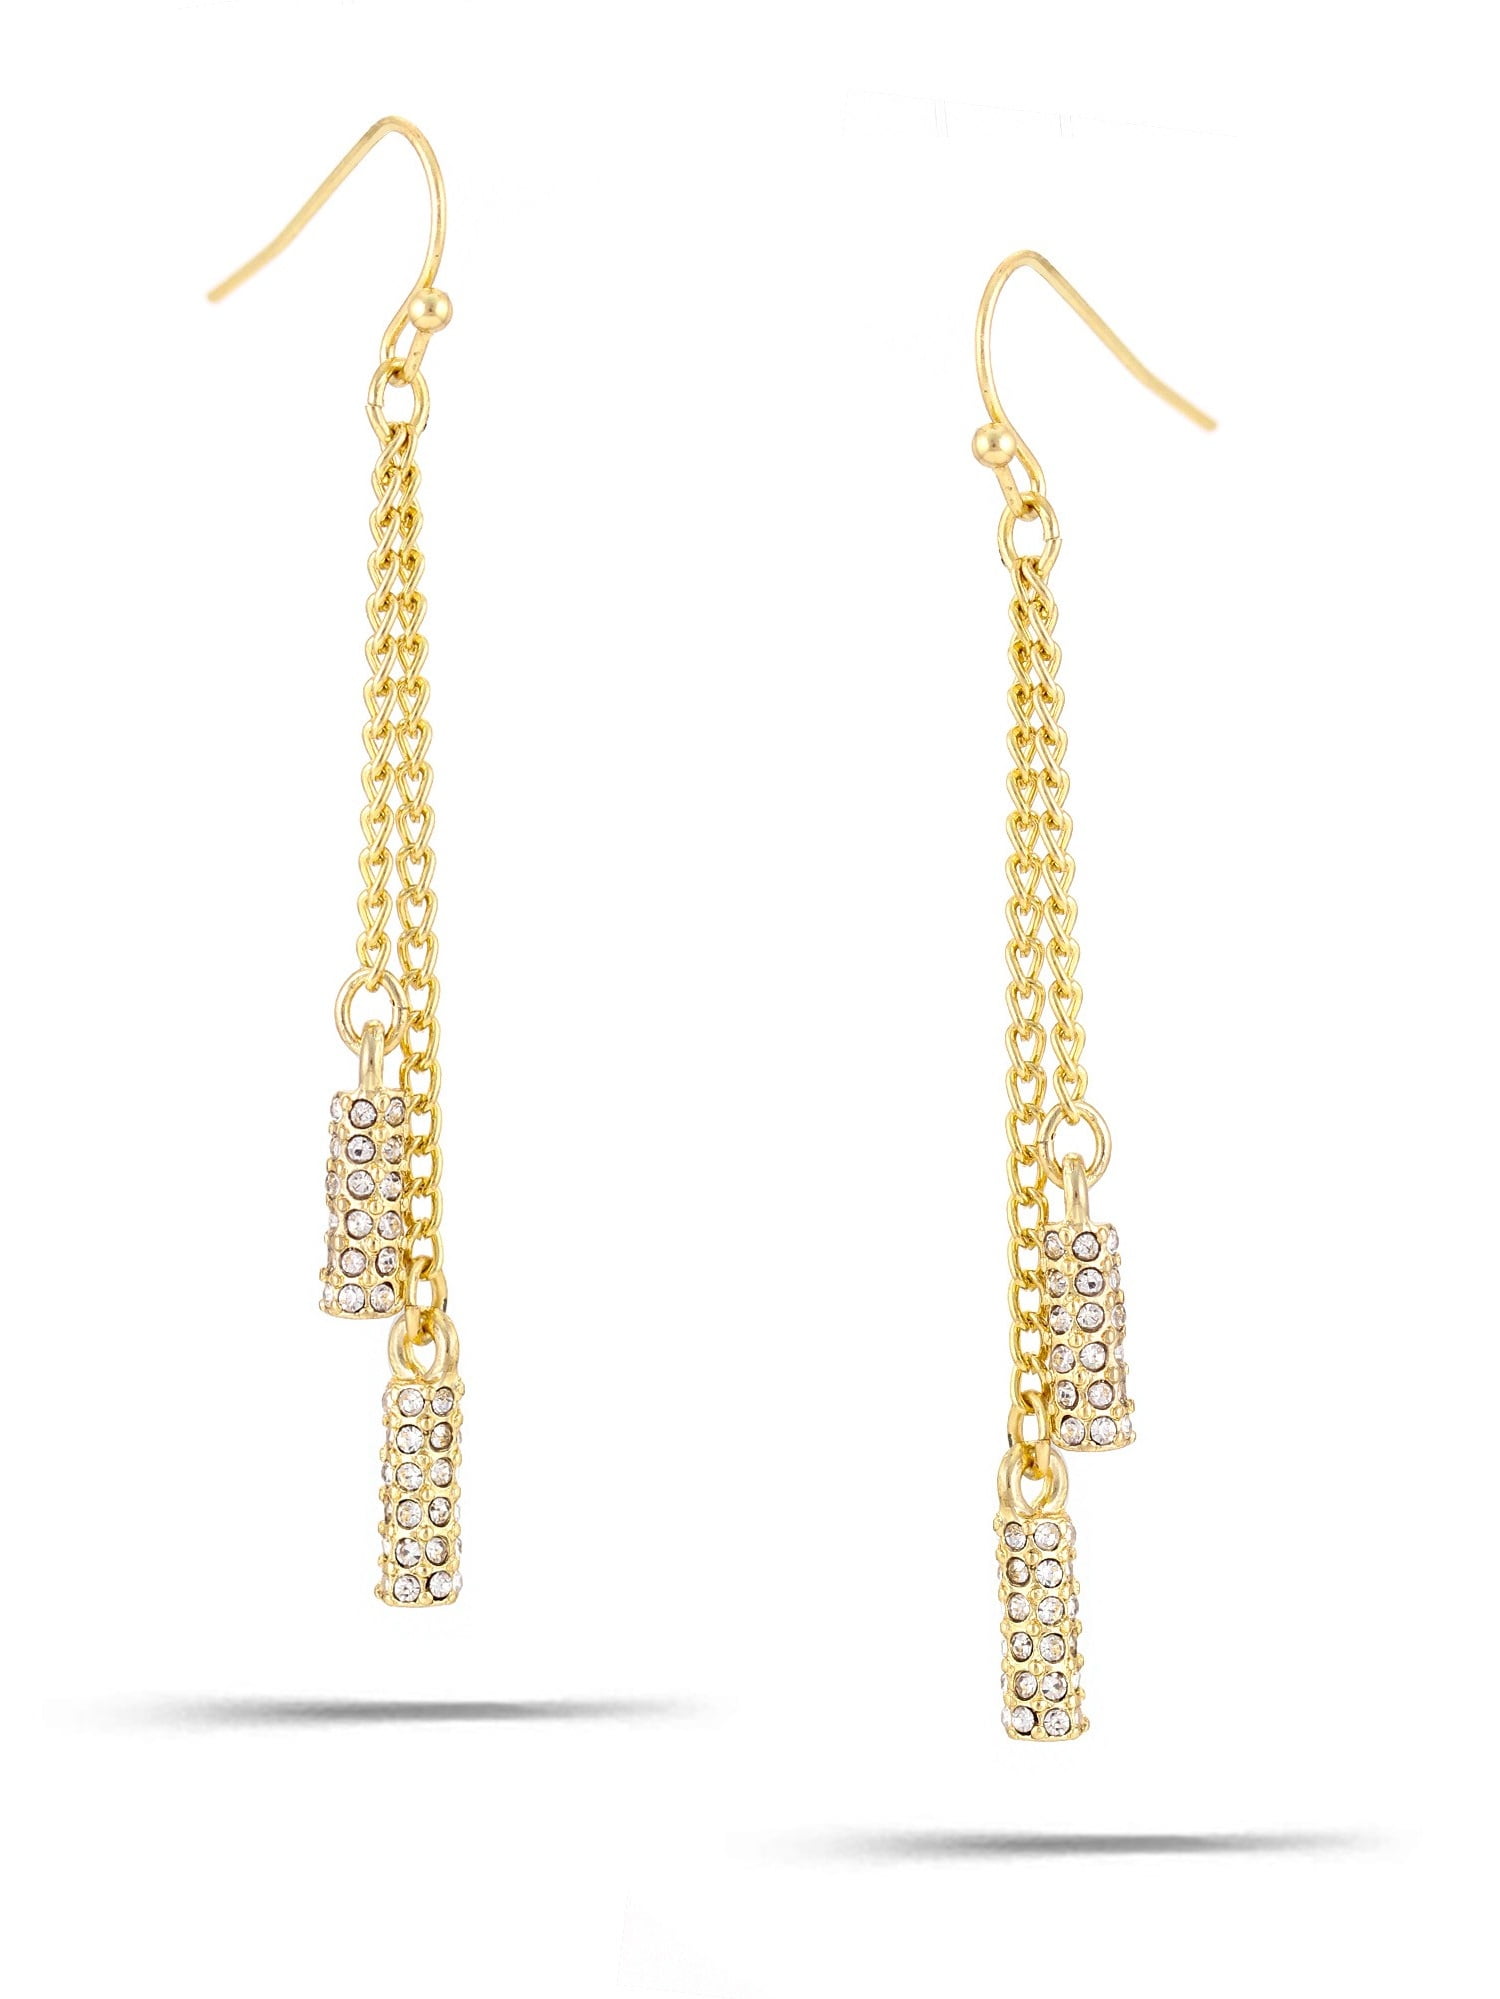 1 Pair Women Lady Jewelry Silver Double Beaded Rhinestone Crystal Stud Earrings